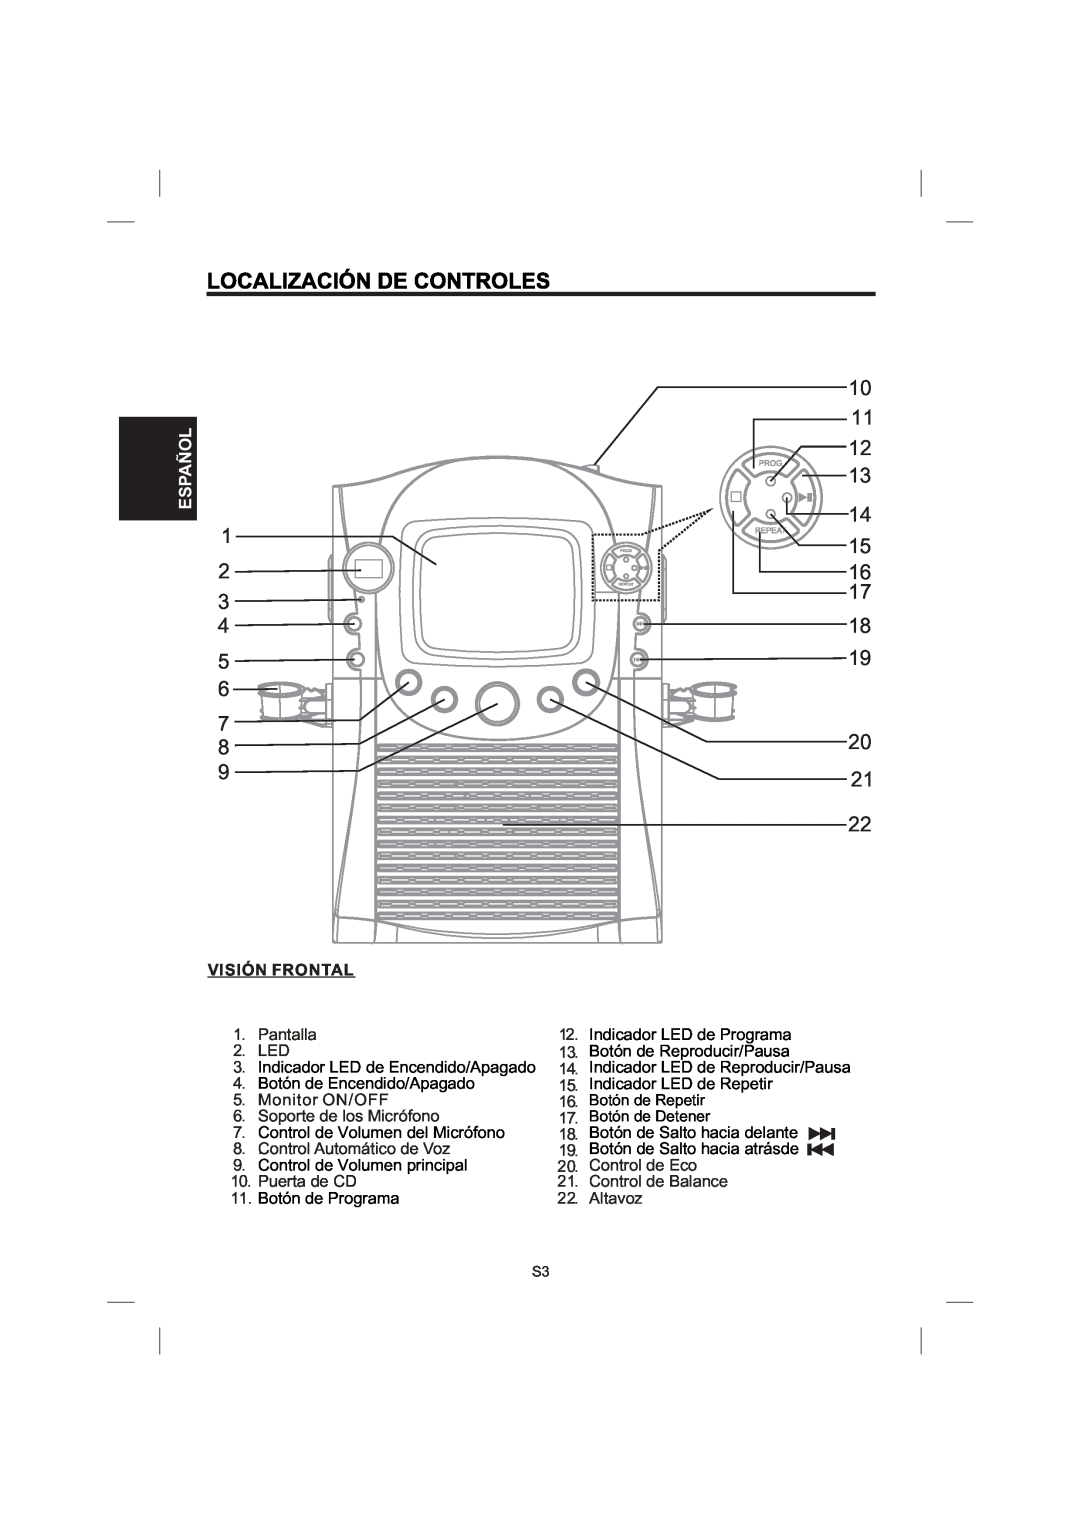 The Singing Machine STVG-559 manual Visión Frontal, Pantalla 2. LED, Control de Balance 22. Altavoz, Español, Puerta de CD 